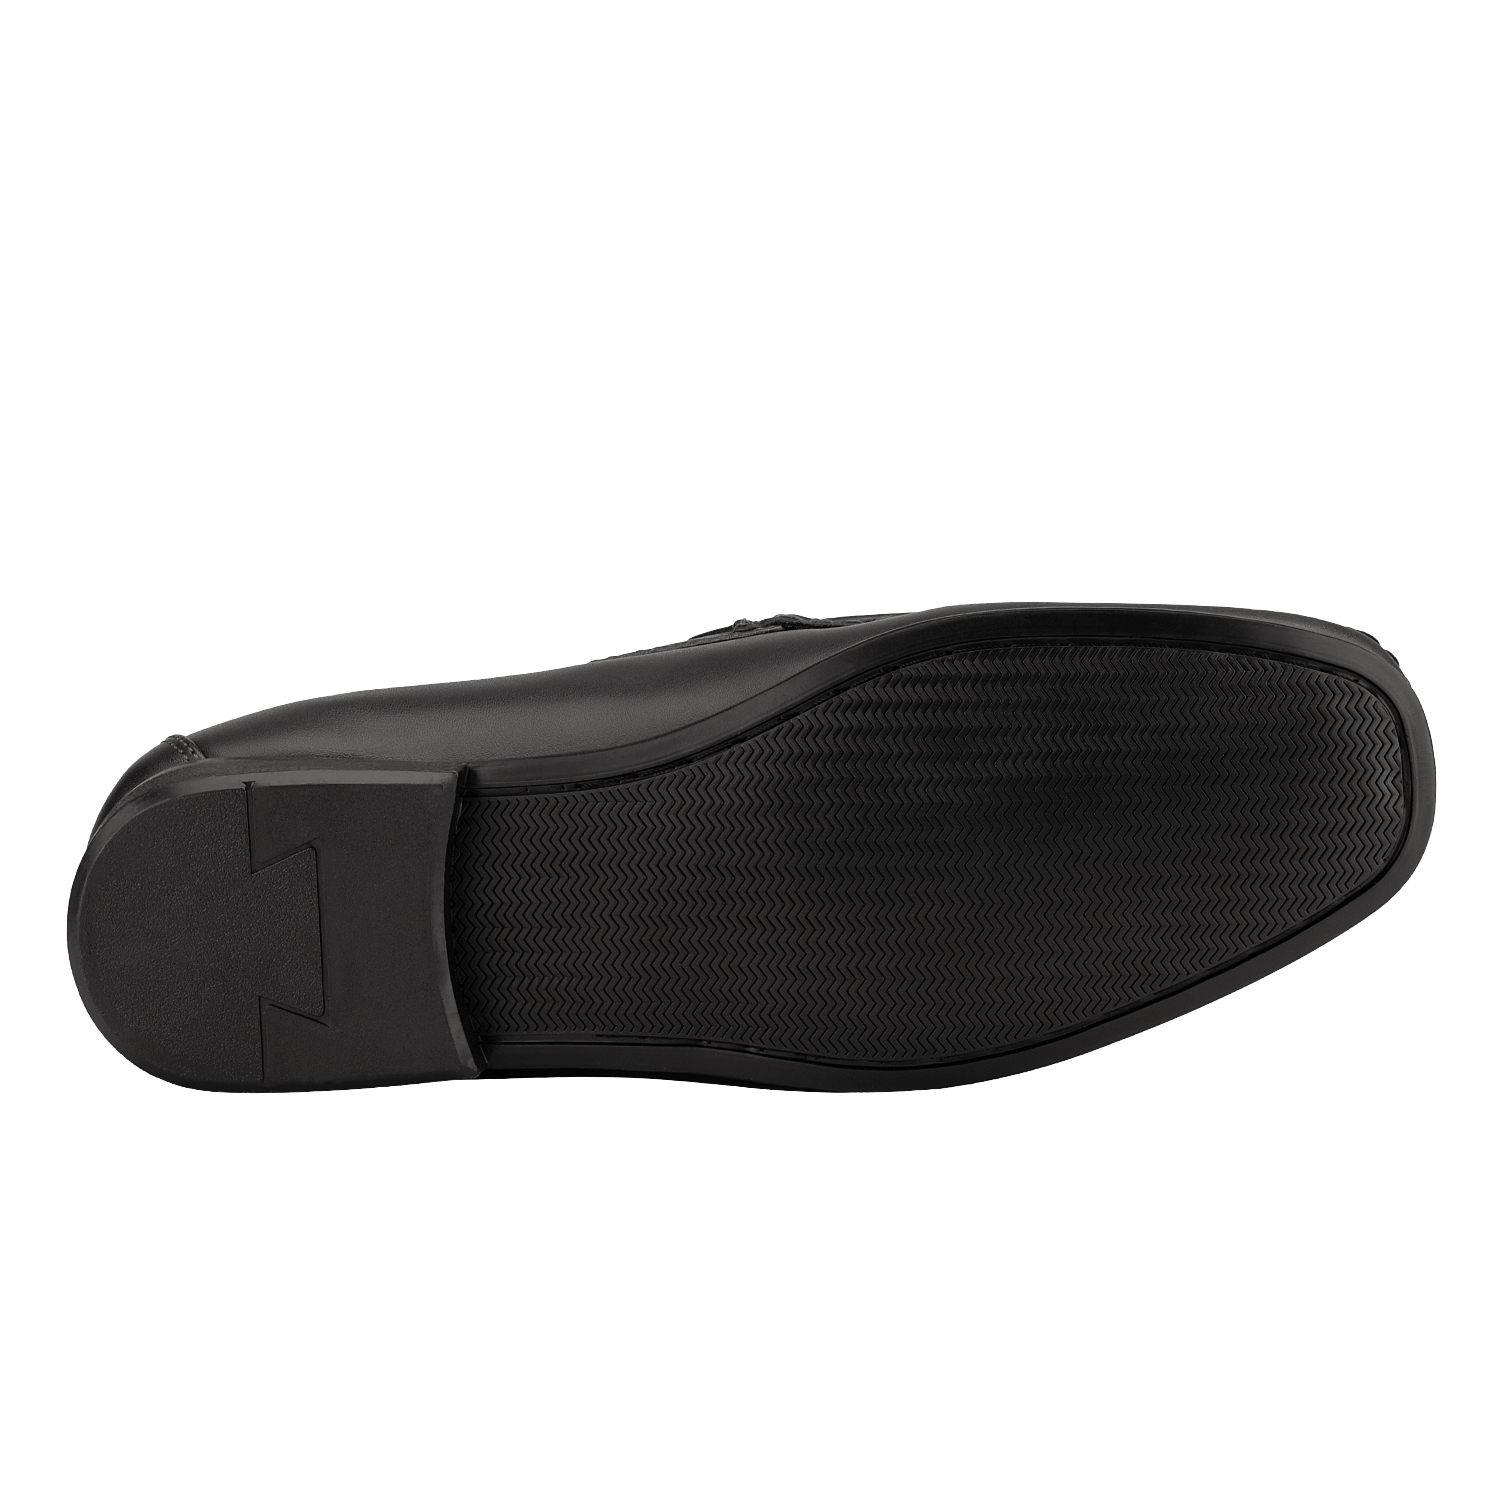 Bruno Marc Men's Moccasin Loafer Shoes Men Dress Loafers Slip On Casual Penny Comfort Outdoor Loafers HENRY-1 BLACK Size 9 - image 5 of 5